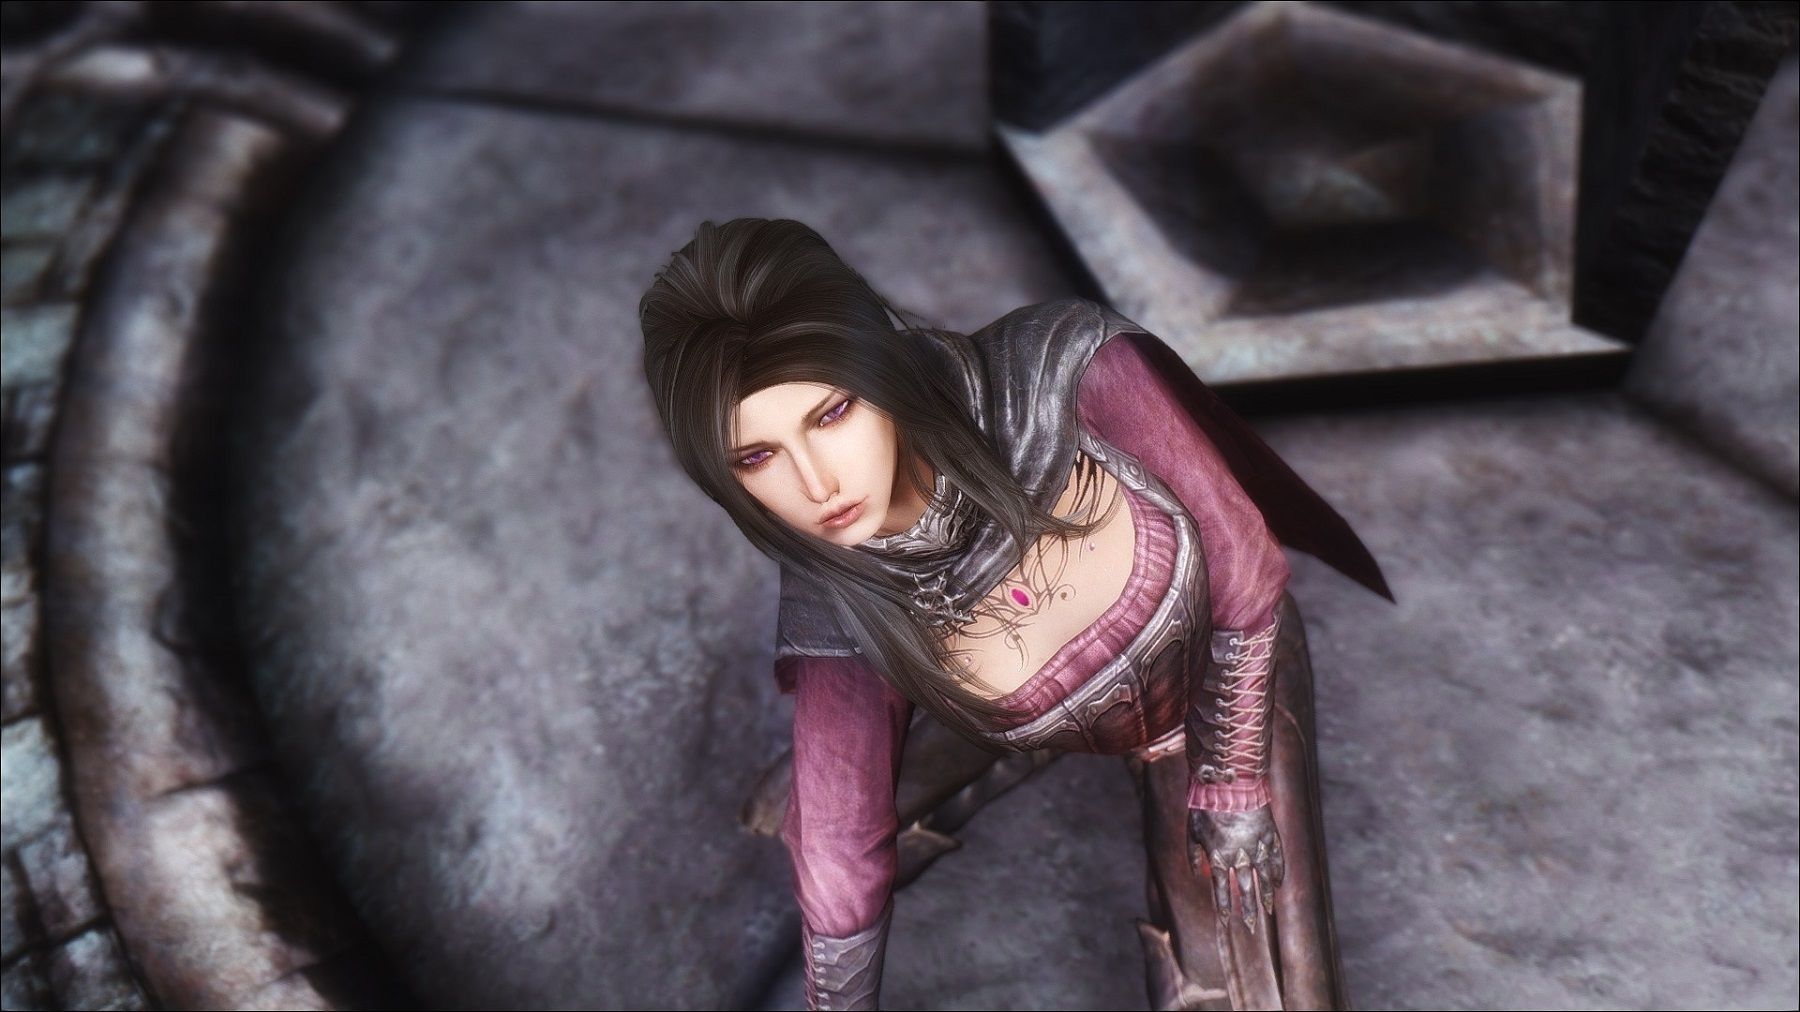 Screenshot from Skyrim showing an improved version of Serana.